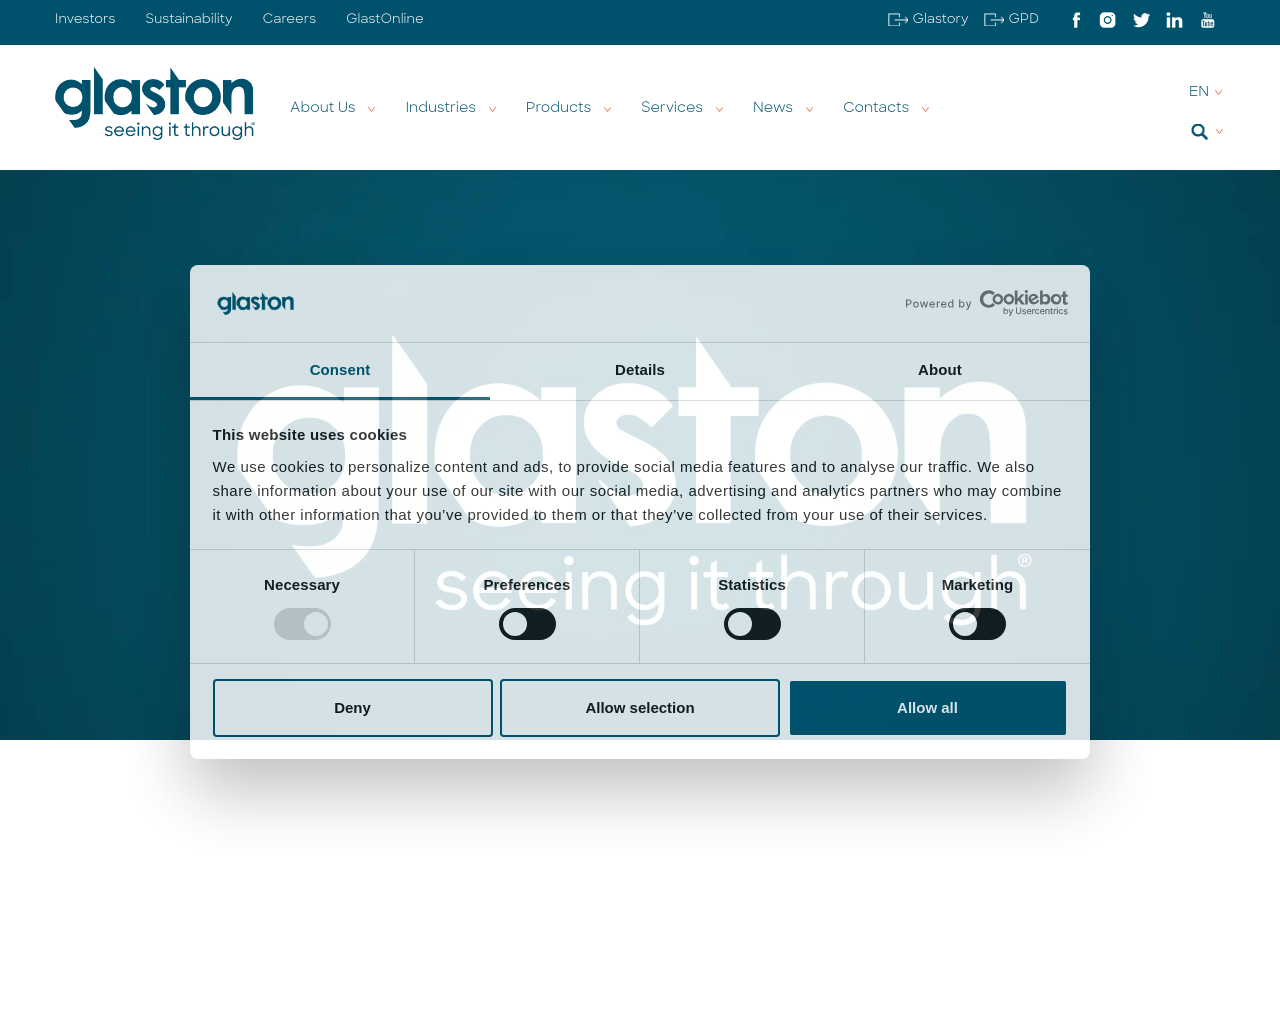 glaston.net